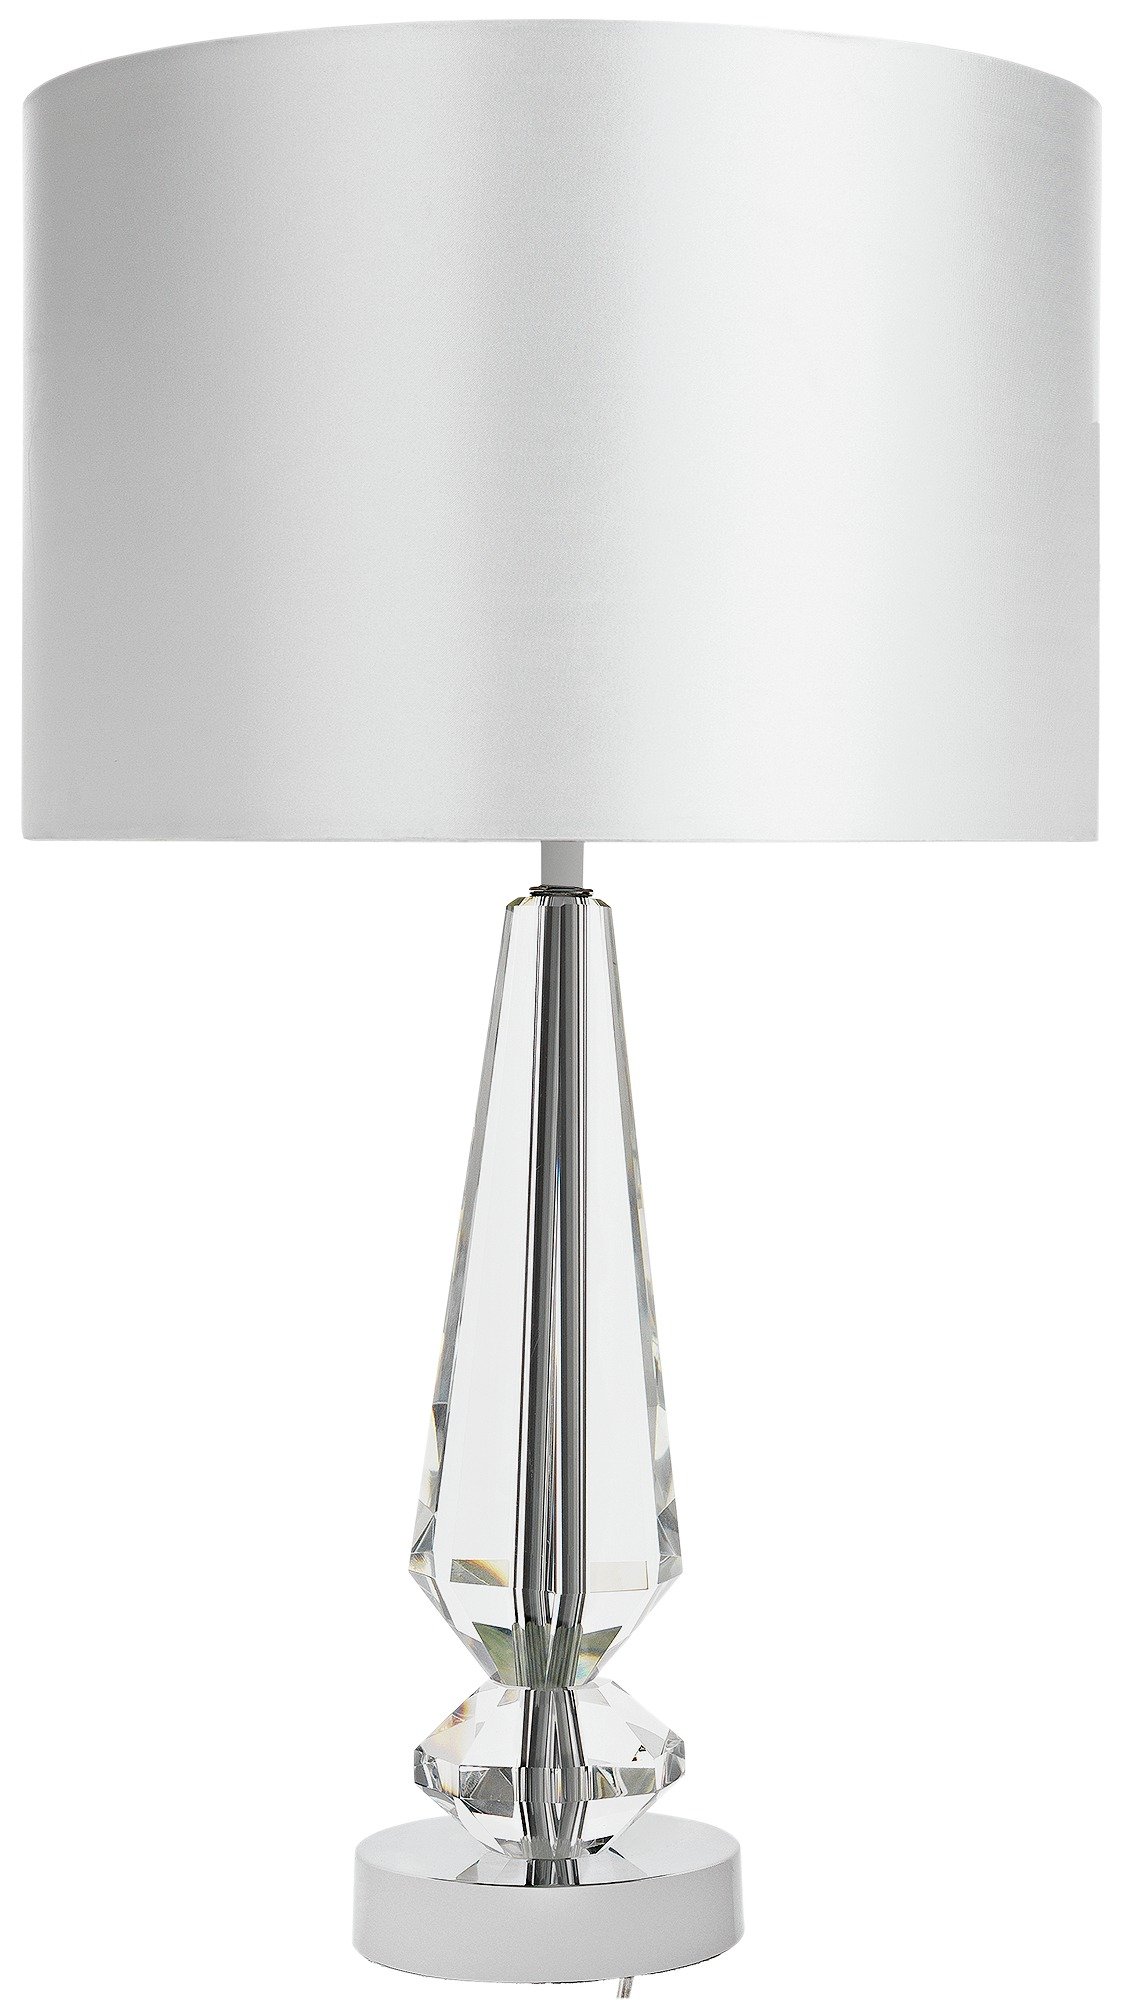 Argos Home Ronde Crystal Table Lamp - Chrome